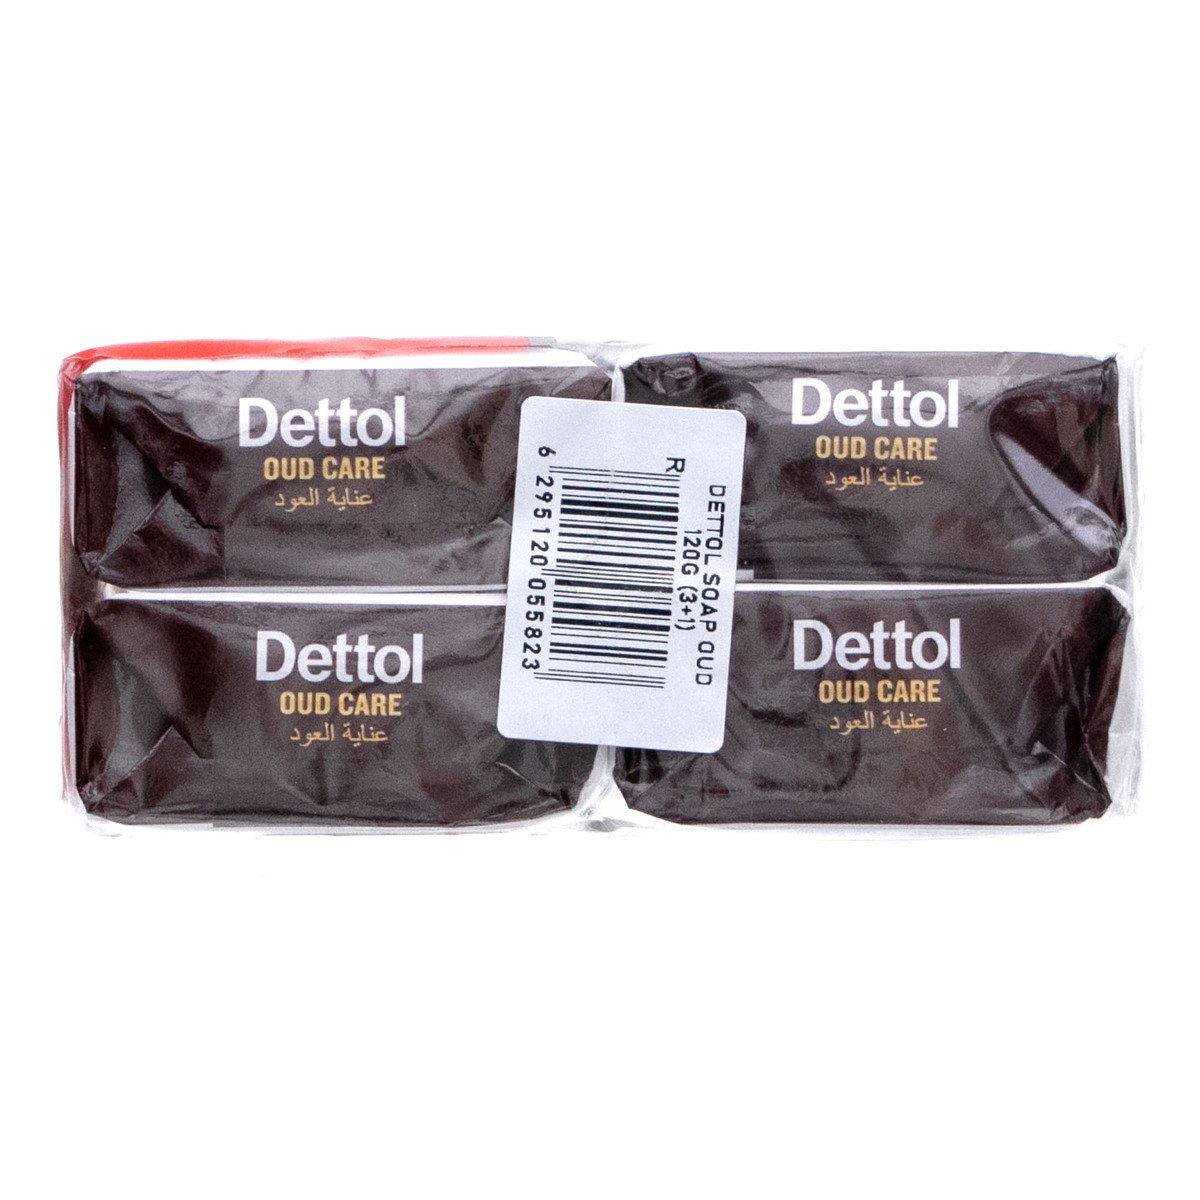 Dettol Oud Care Antibacterial Bar Soap 4 x 120 g